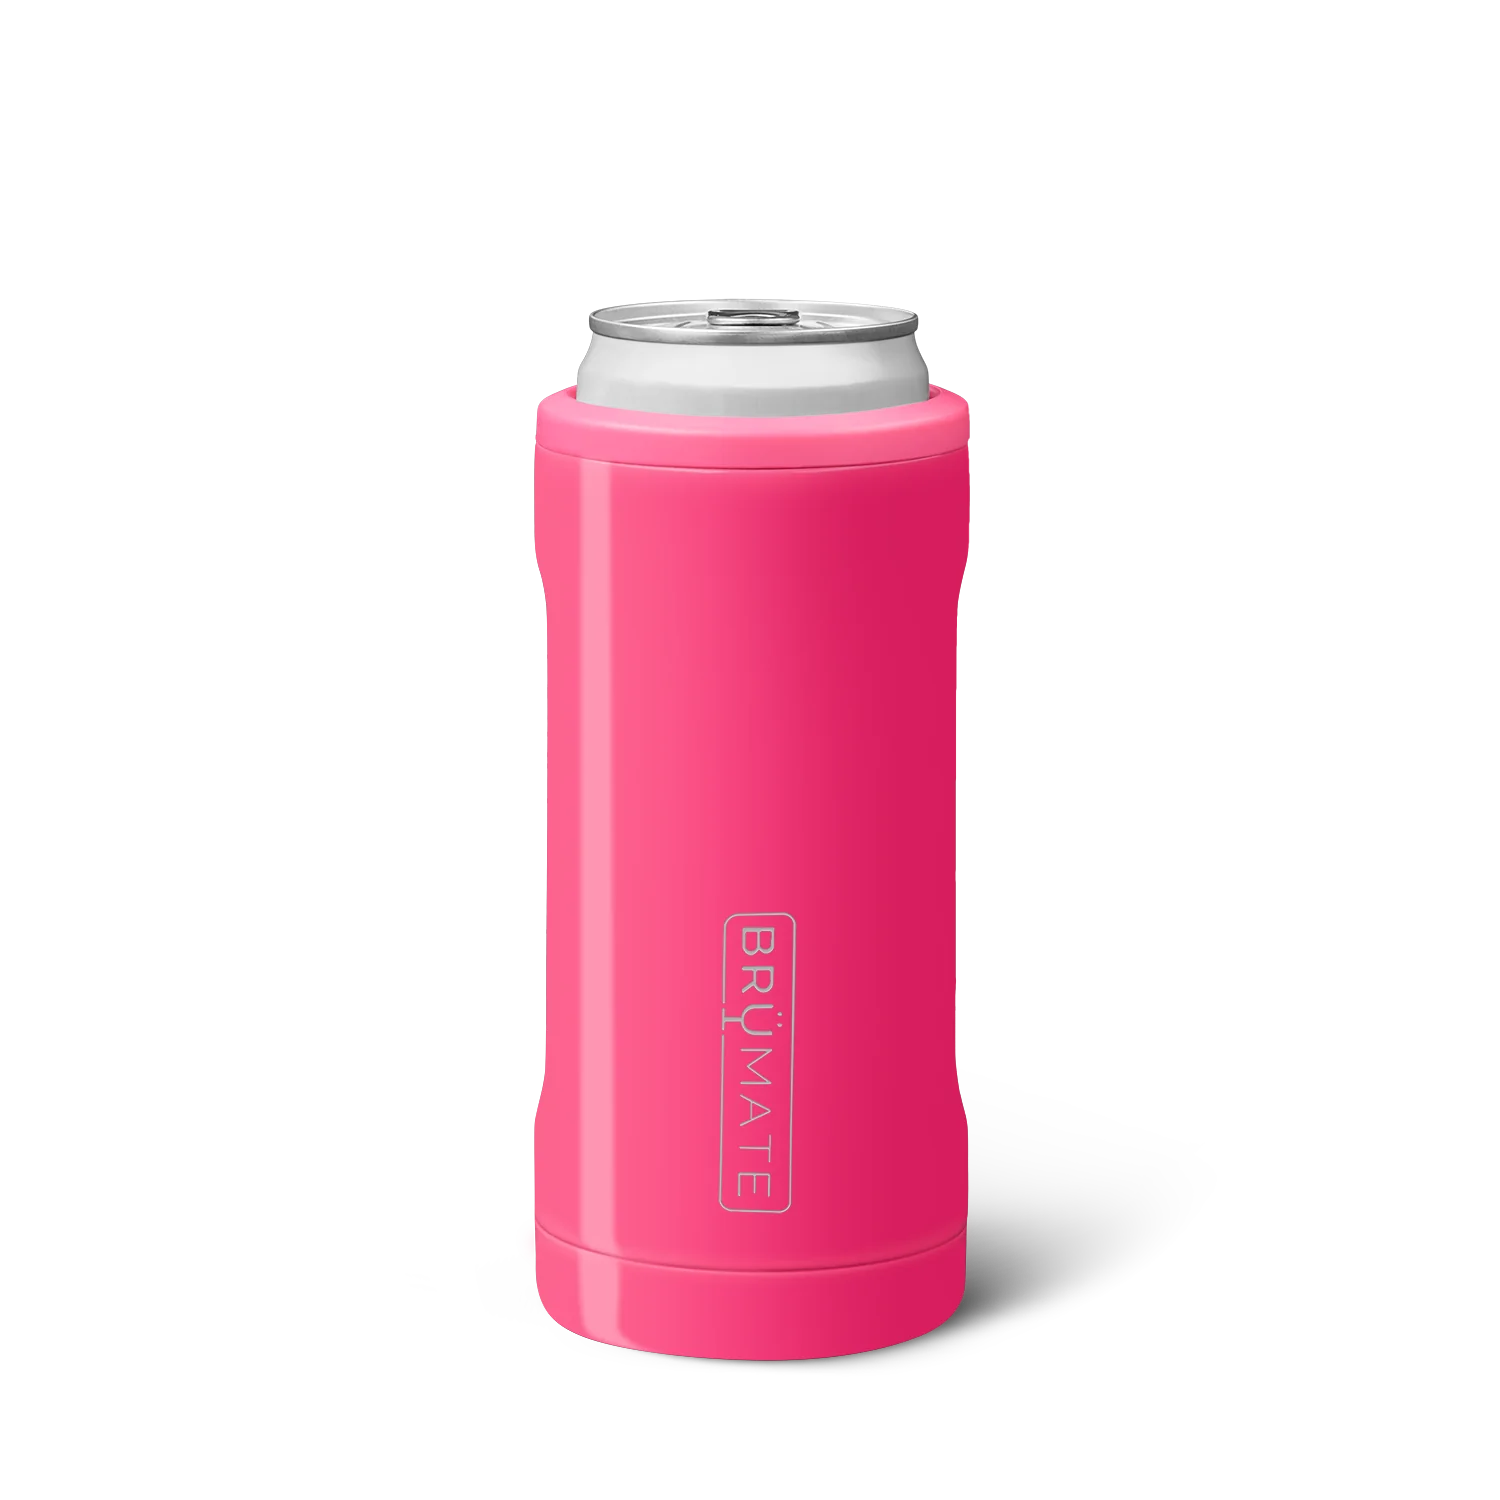 Hopsulator Slim, Neon Pink